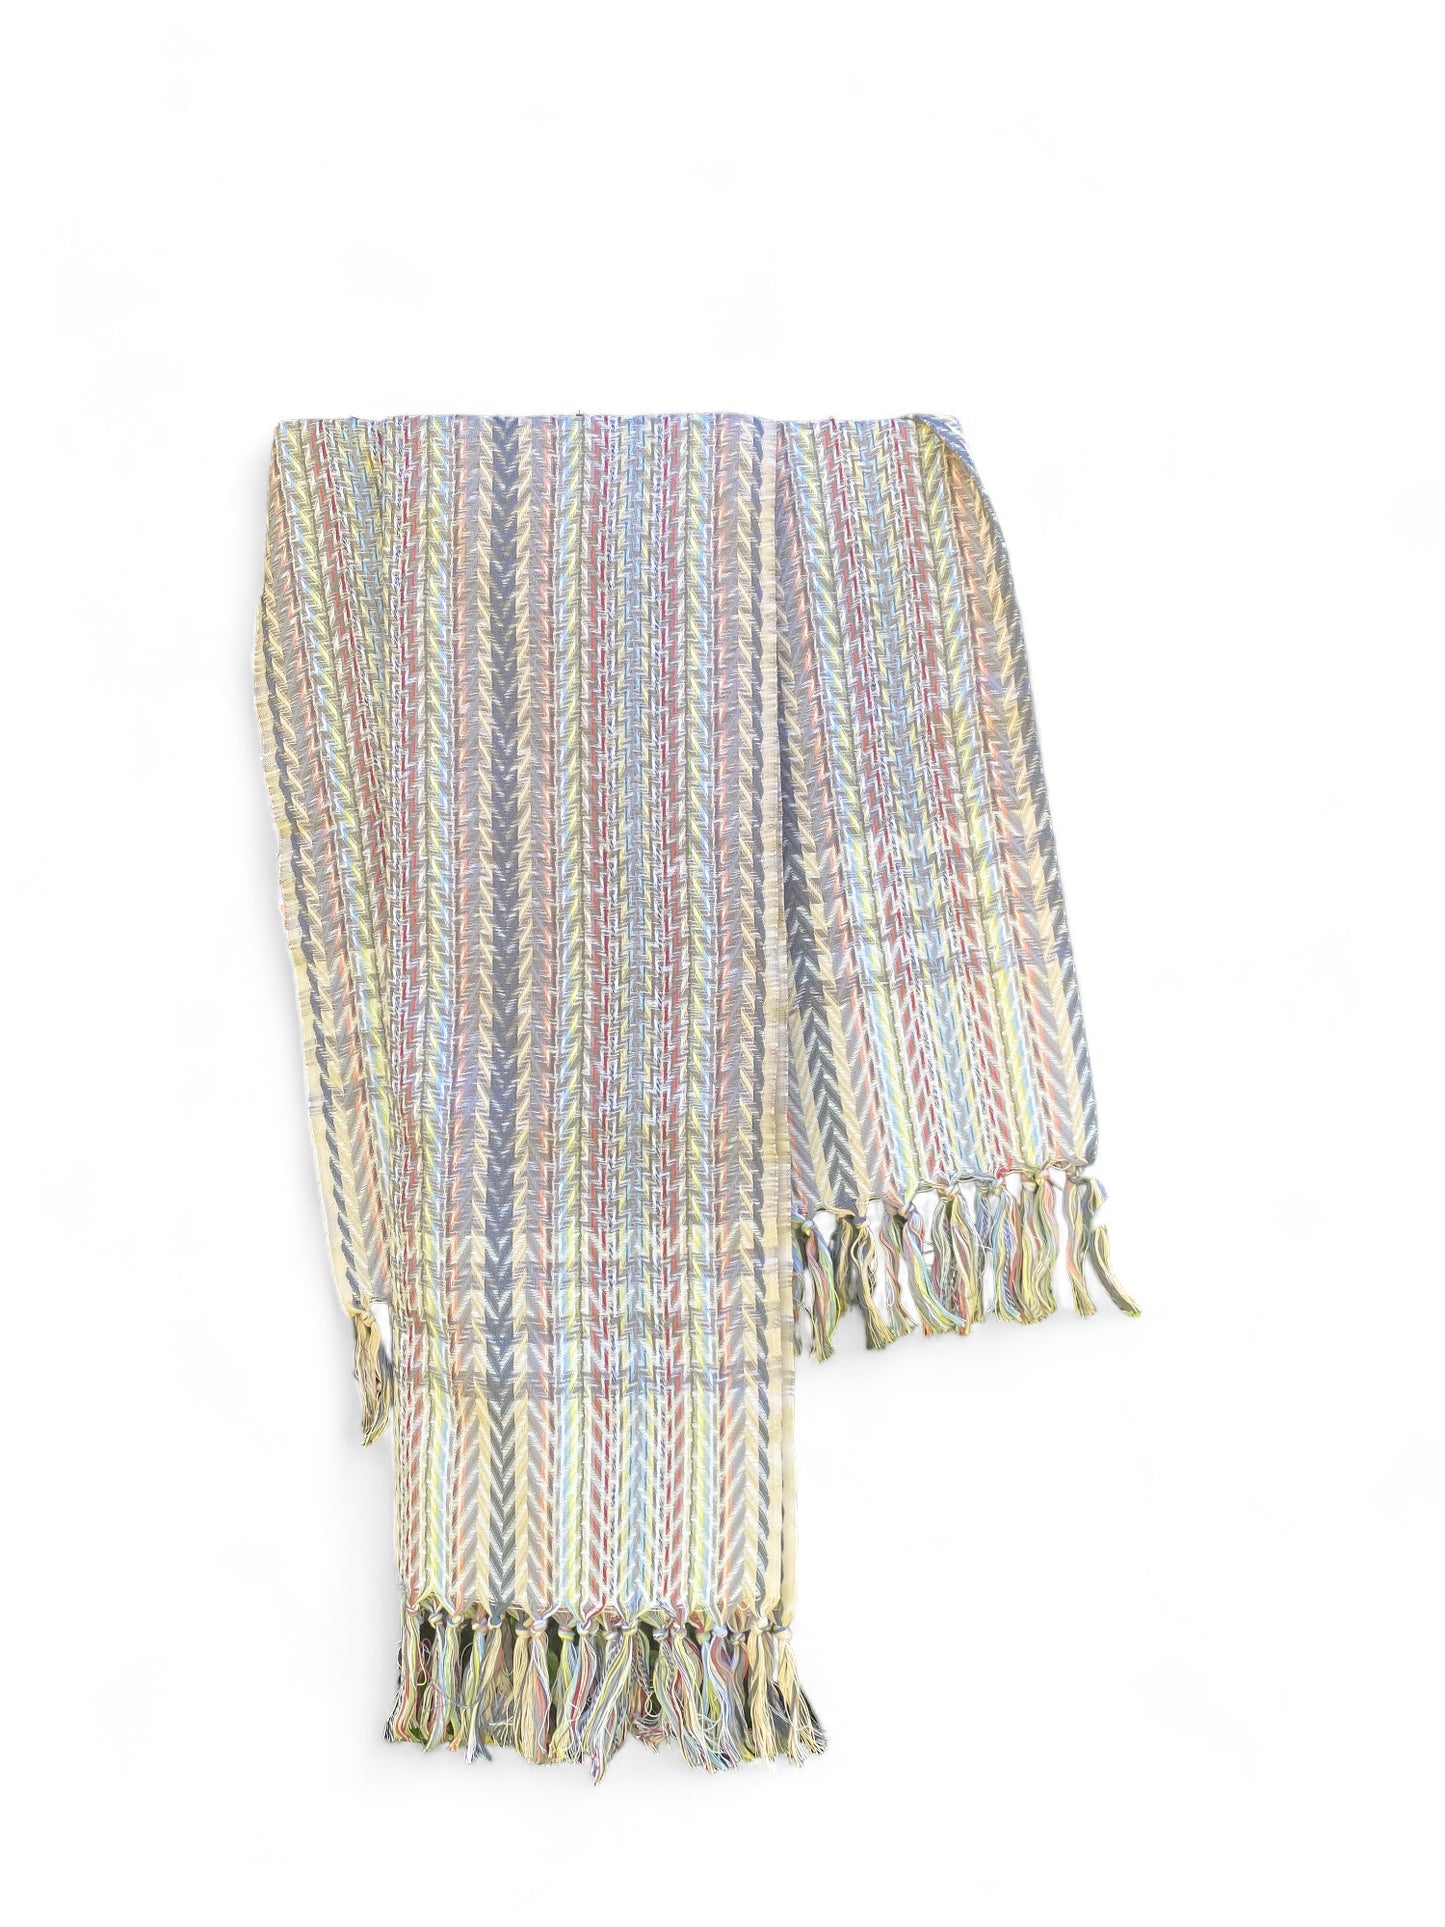 Hammam Towel (Linen)